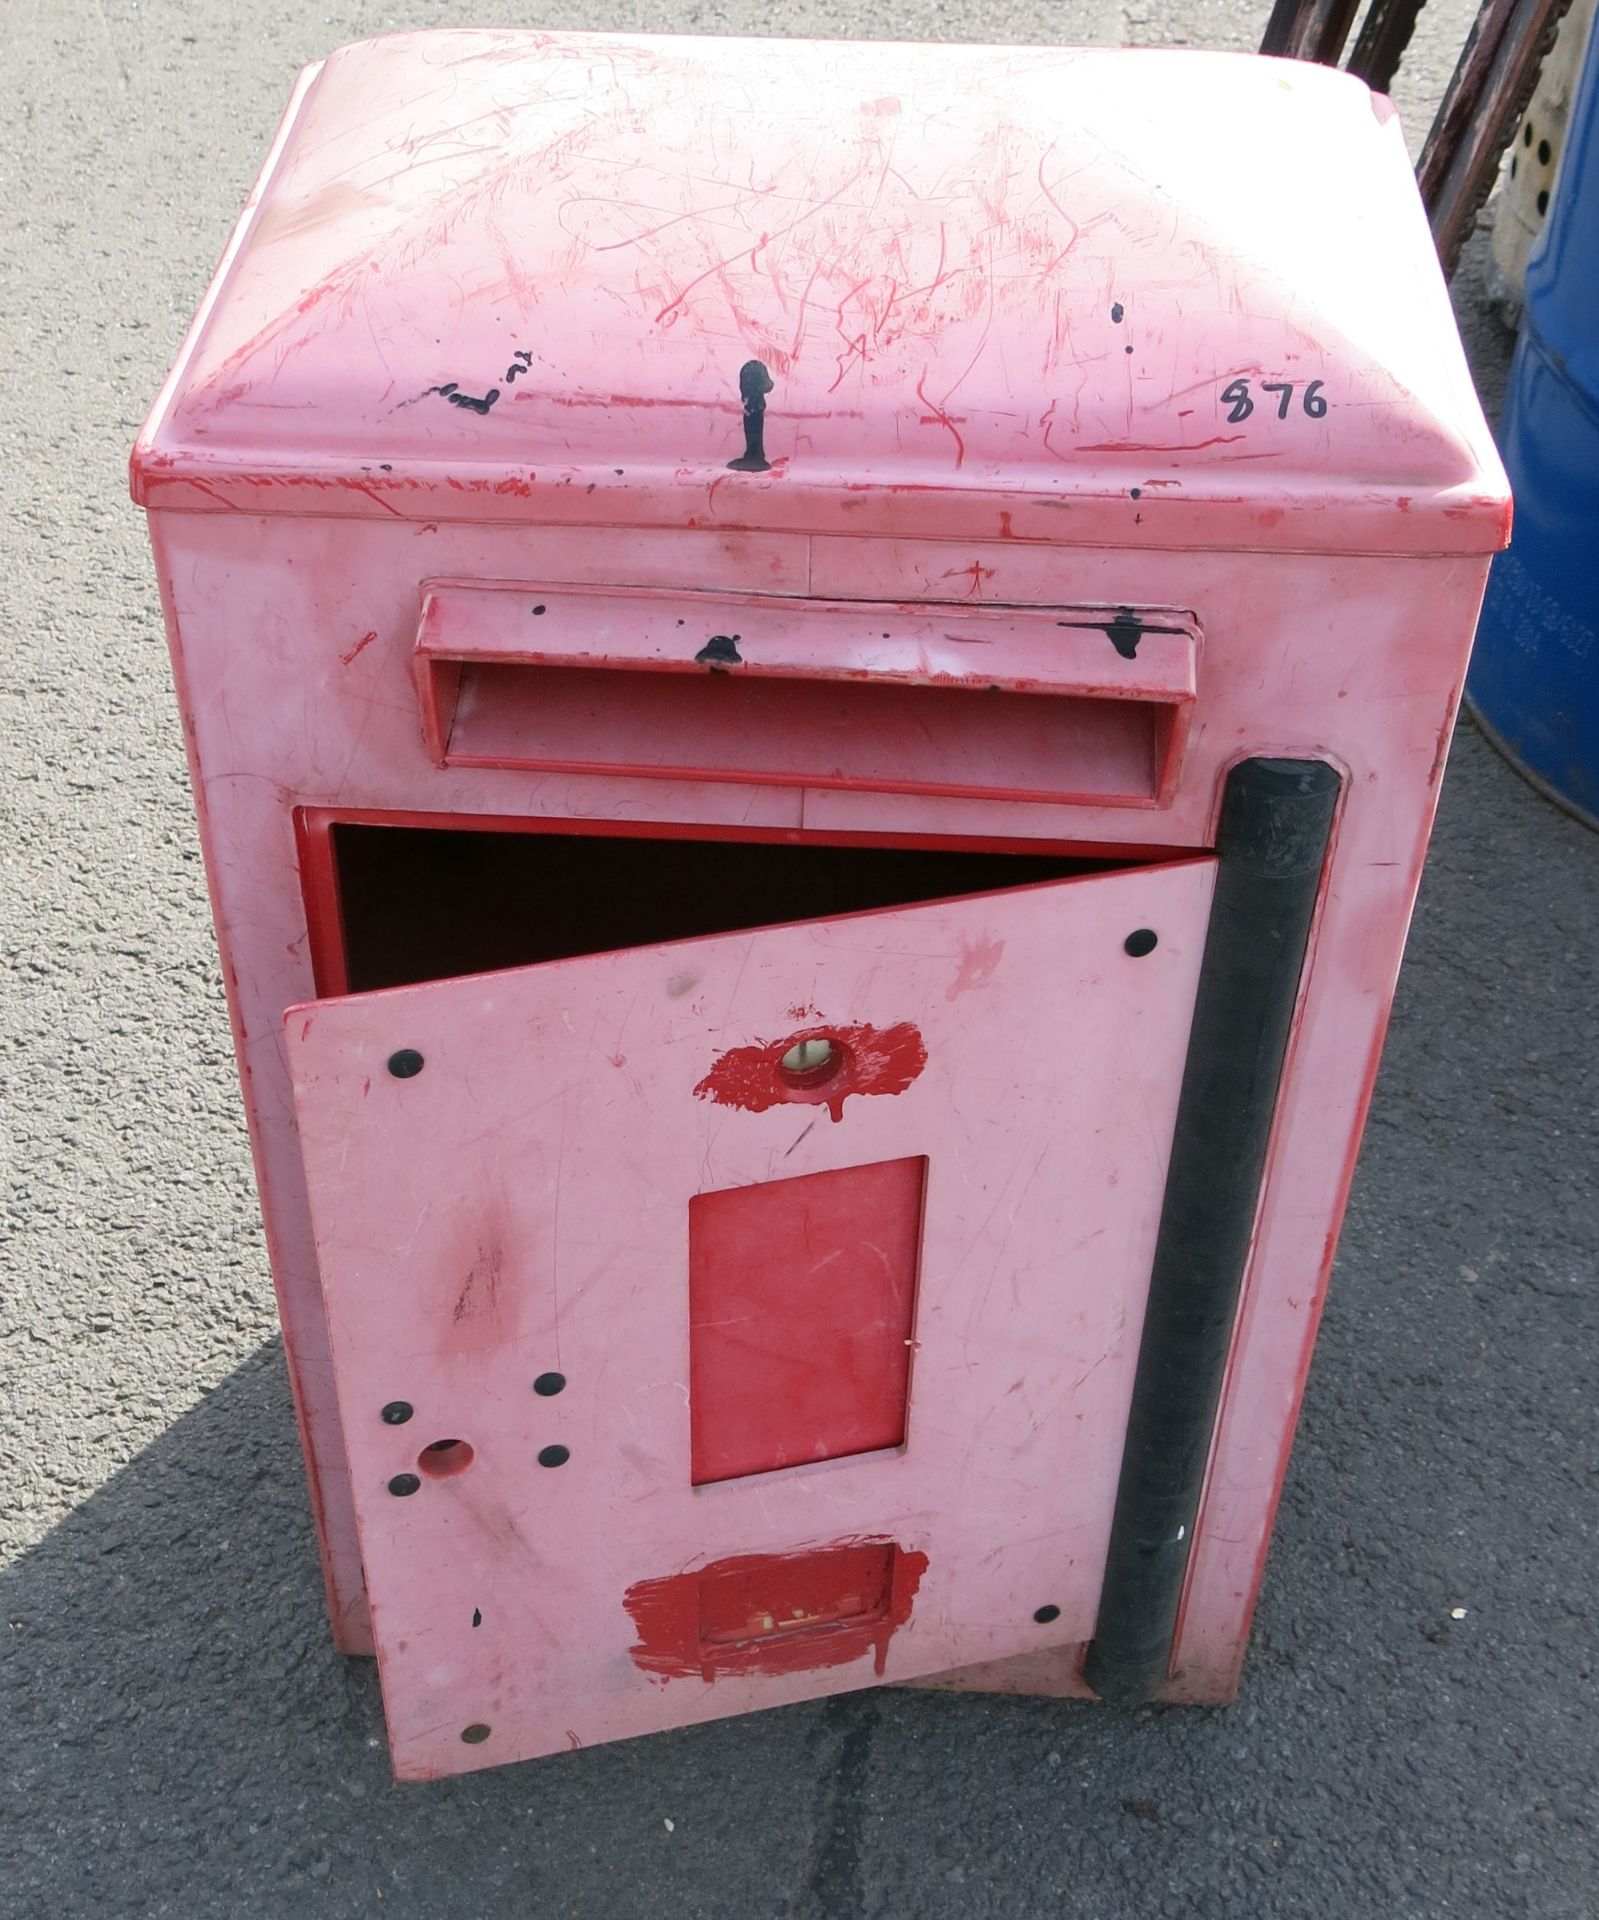 A red lockable post box (no lock)